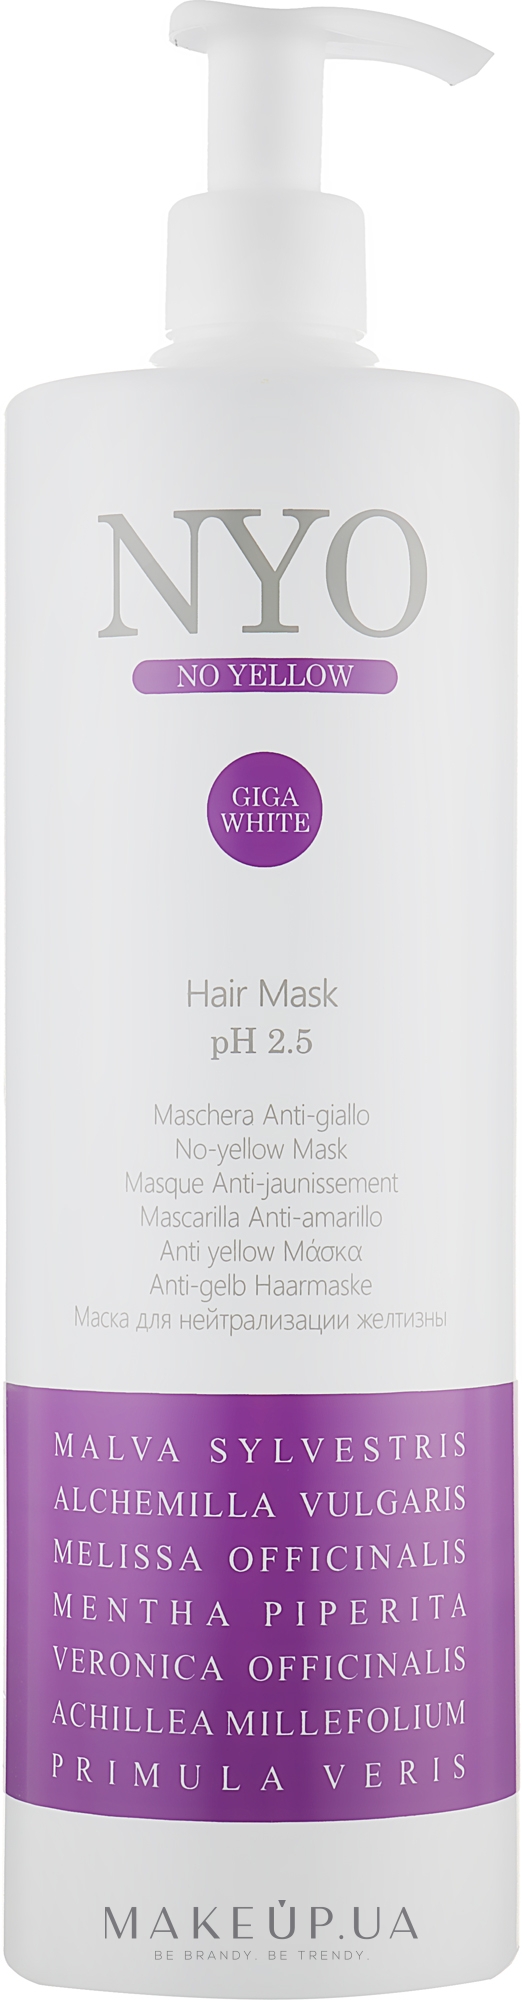 Маска для нейтрализации желтизны волос - Faipa Roma Nyo No Yellow Hair Mask — фото 1000ml